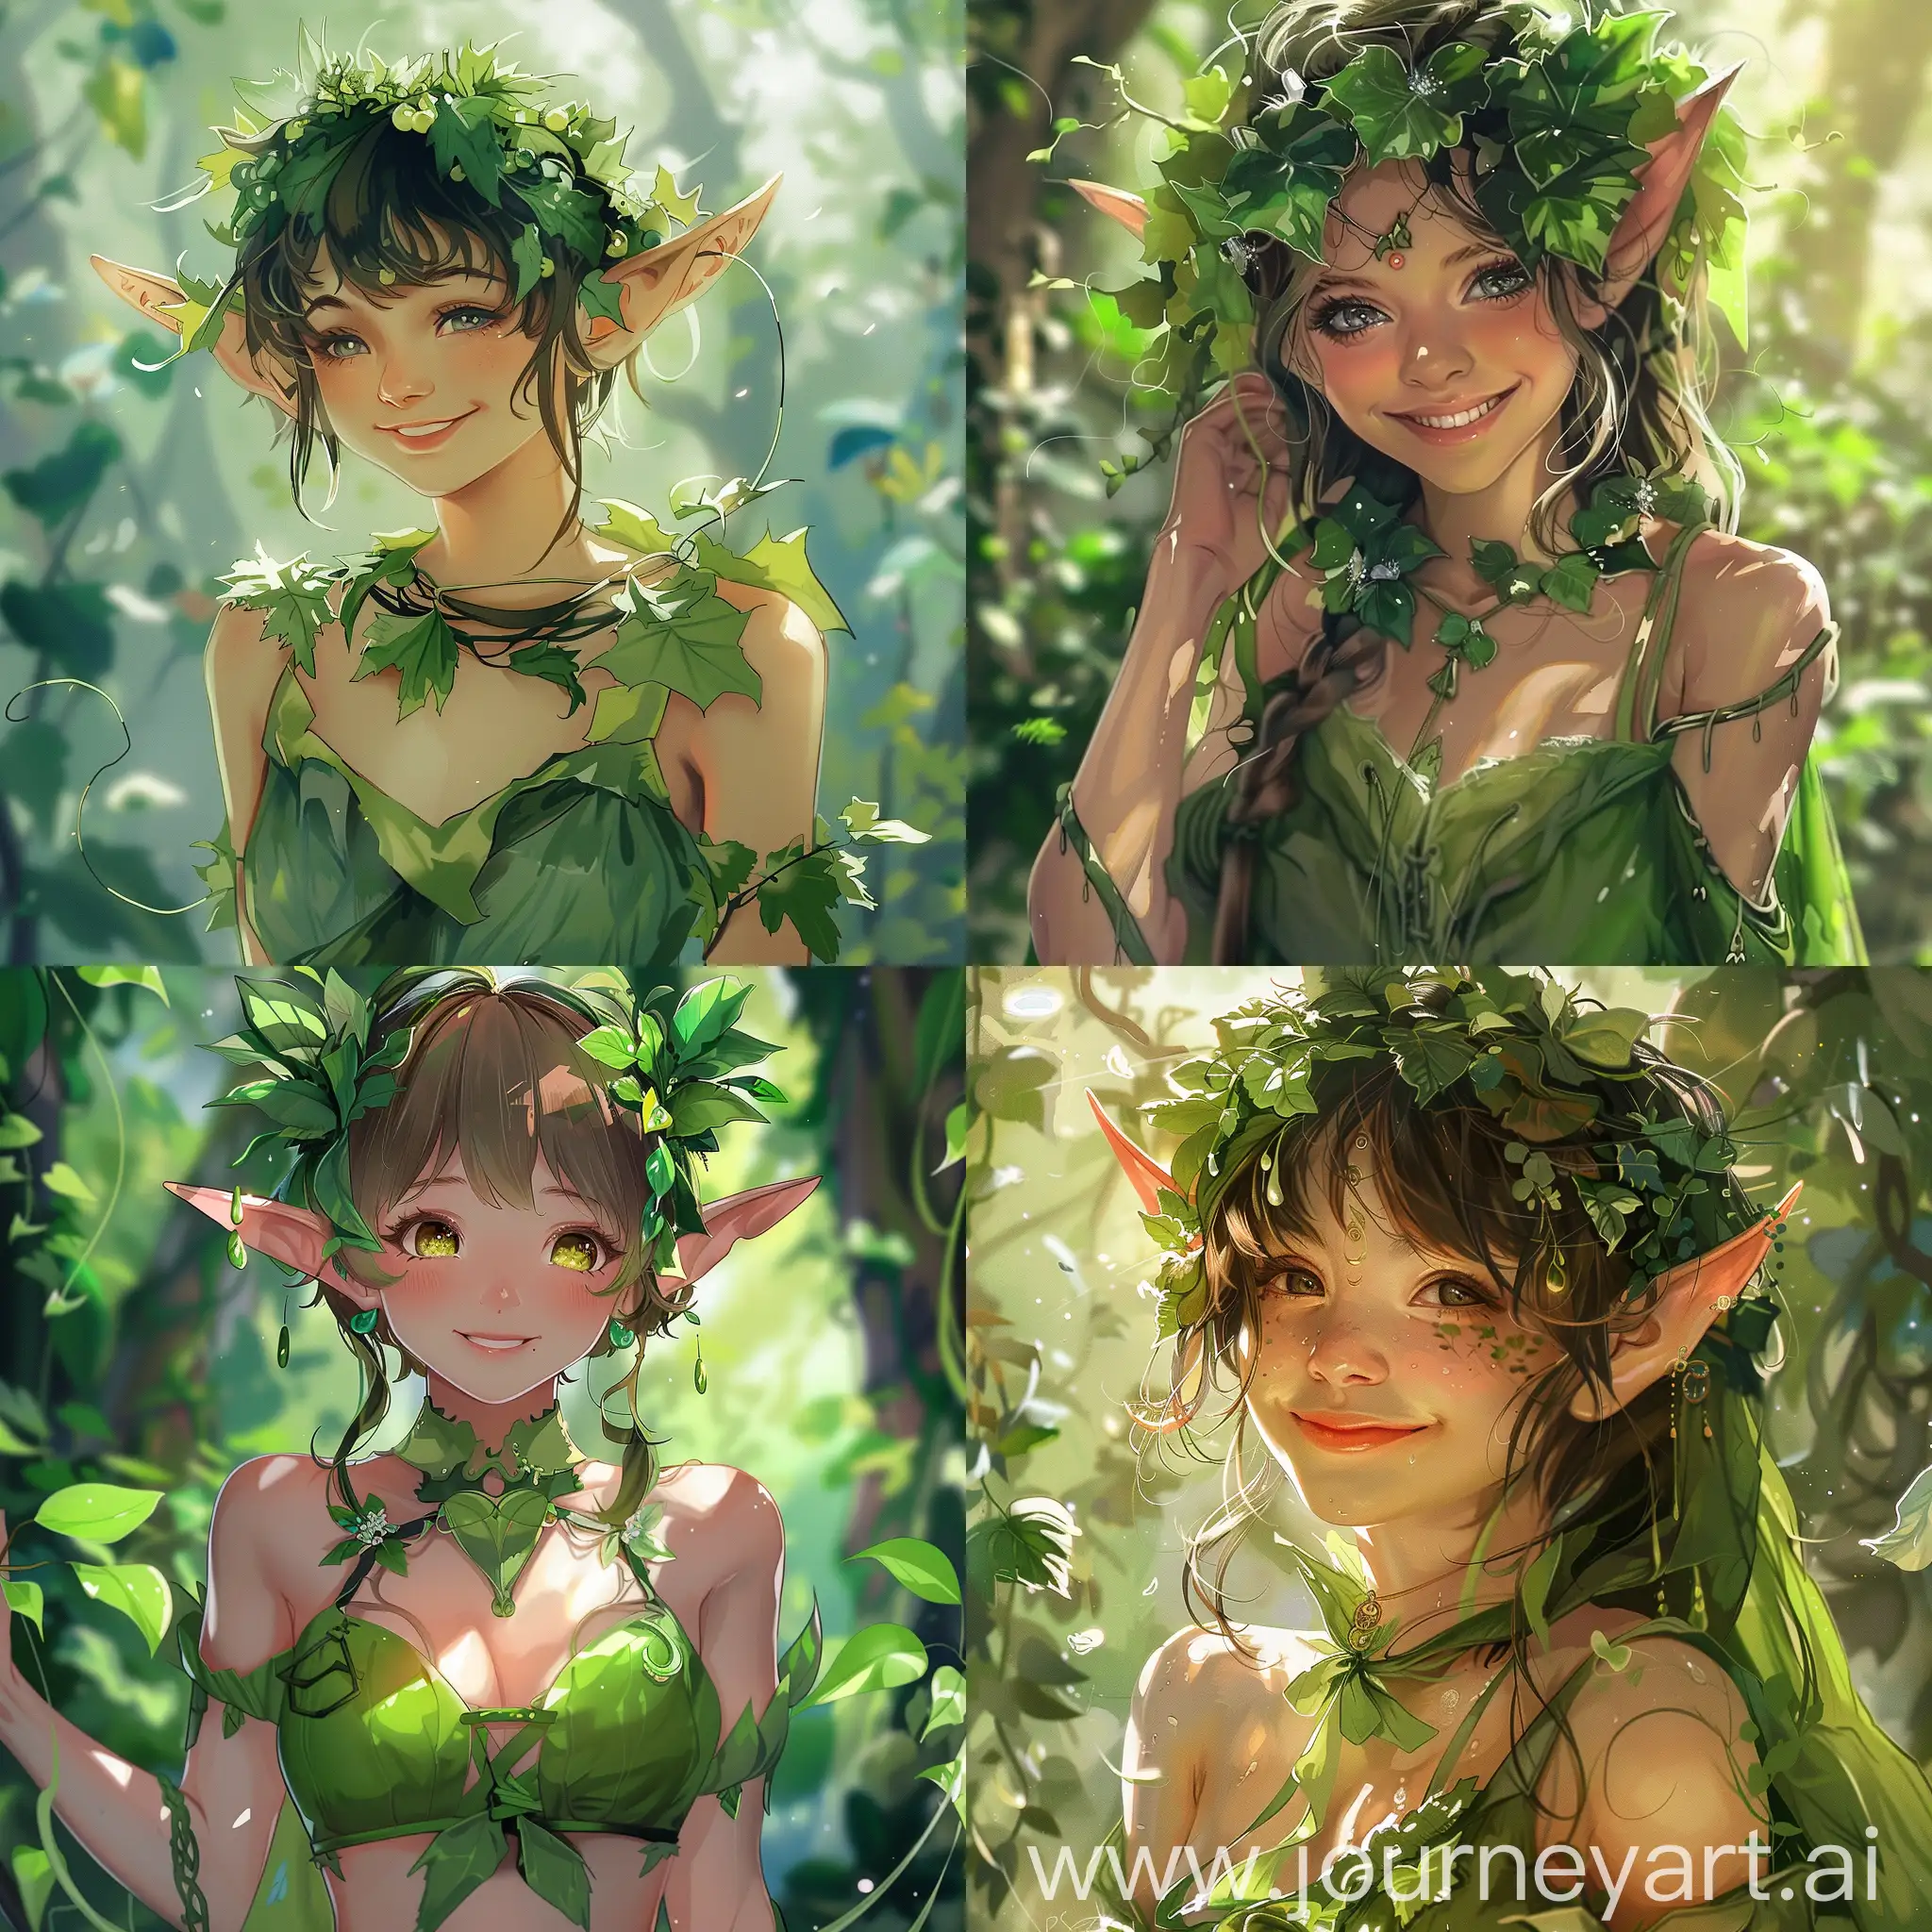 Surreal-Anime-Illustration-Enchanting-Elf-Woman-in-Green-Attire